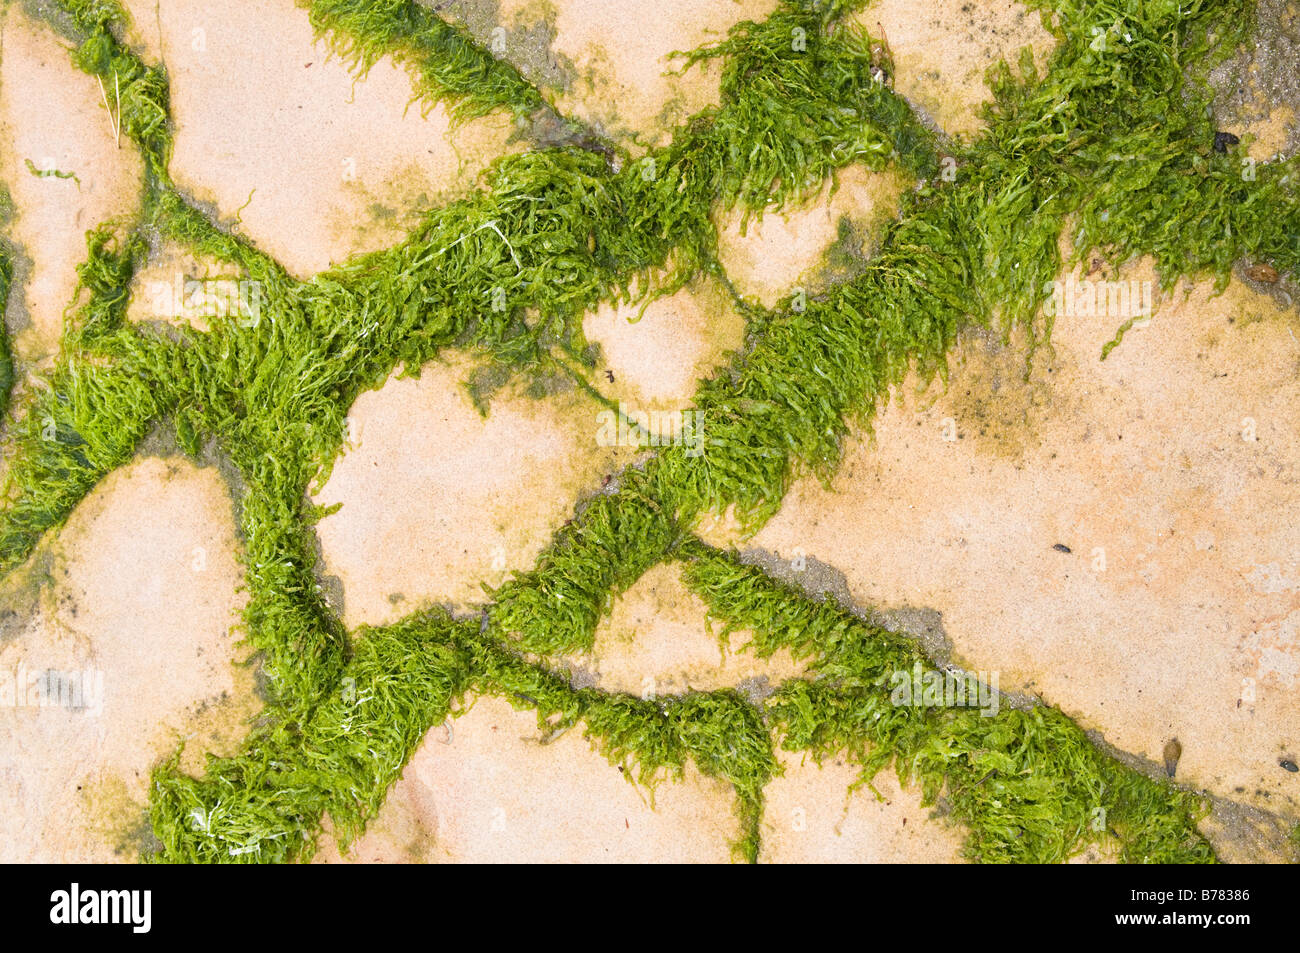 Green seaweed forming a geometric pattern on rocks Stock Photo